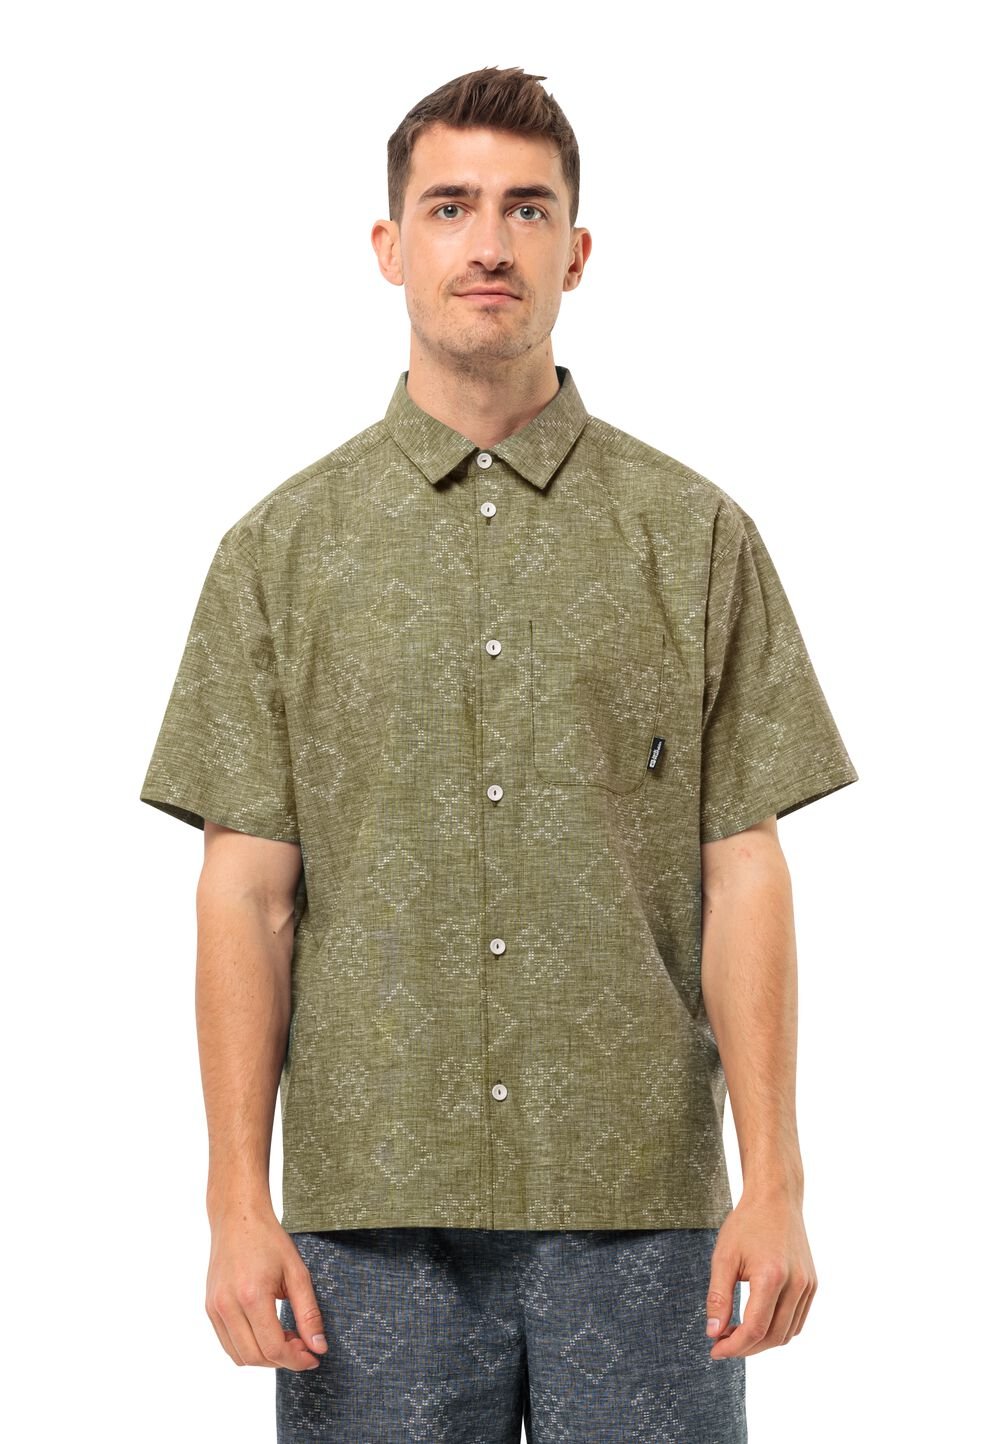 Jack Wolfskin Karana Shirt Men Overhemd met korte mouwen Heren XL bruin bay leaf